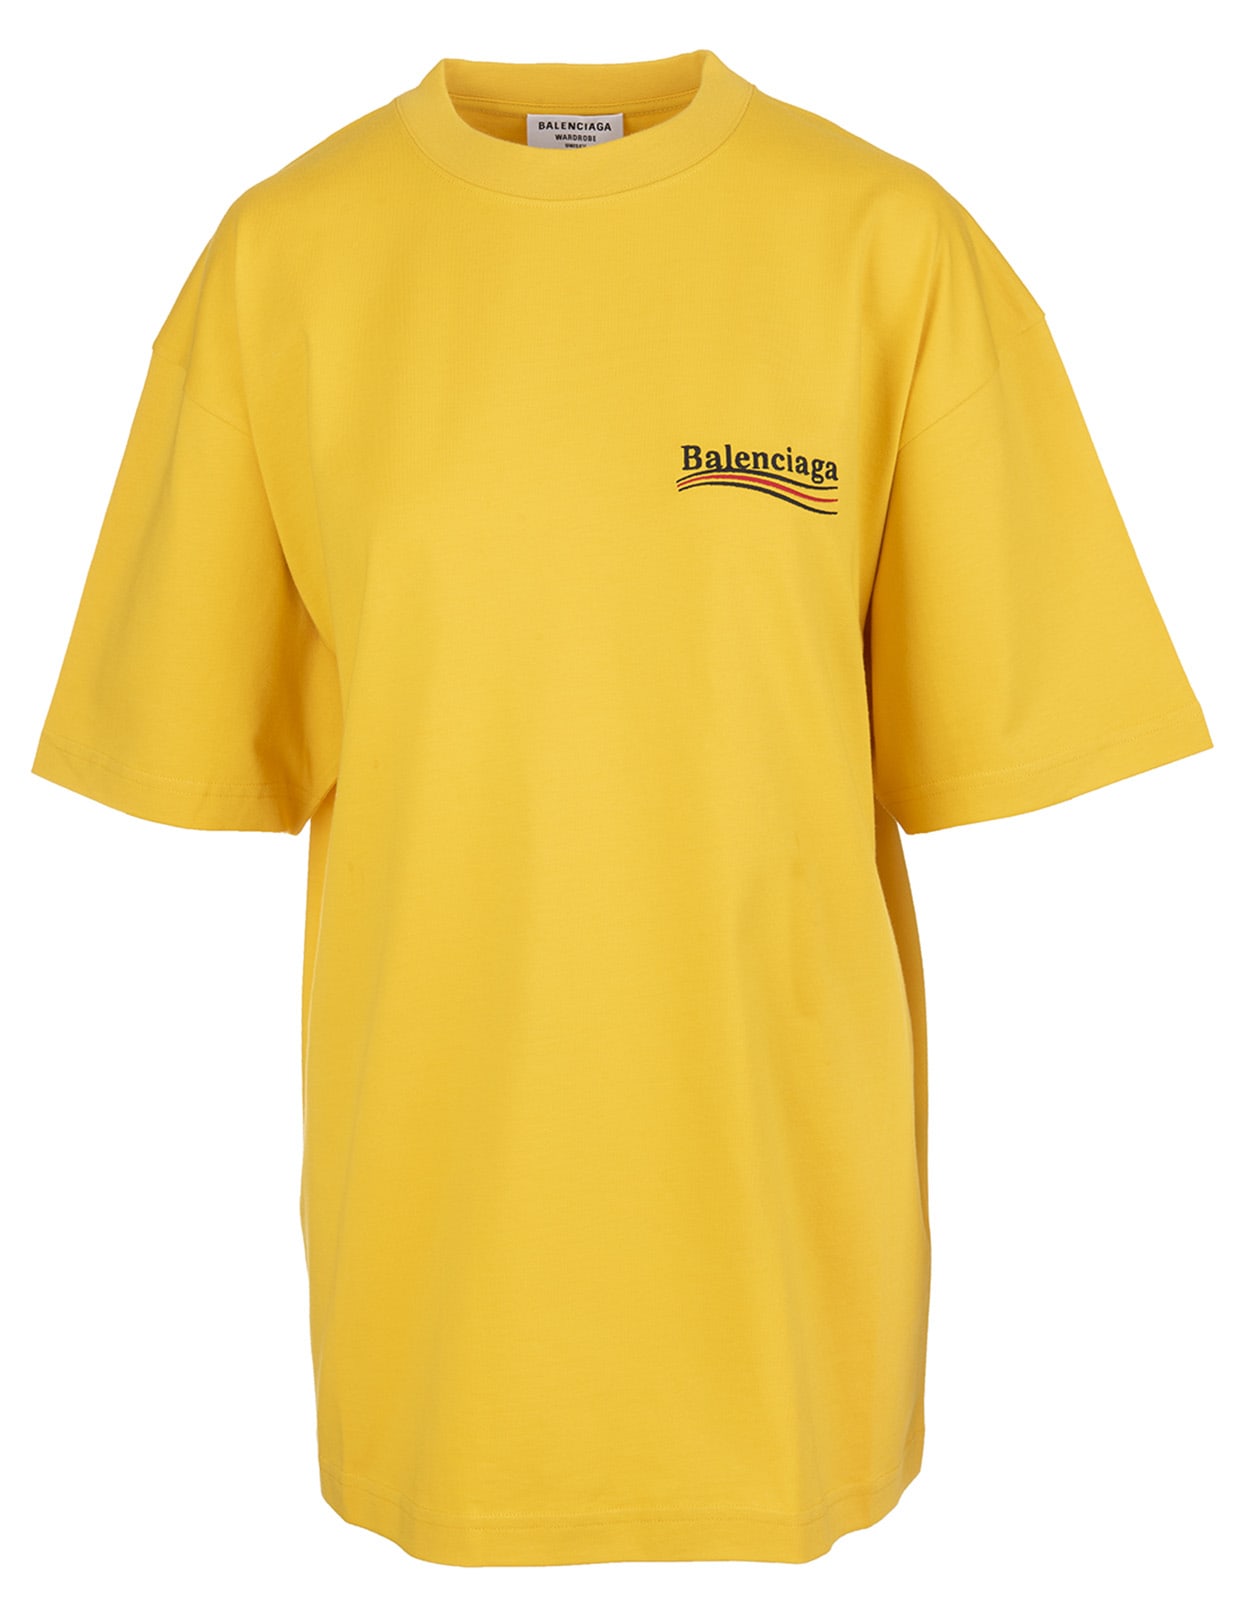 Balenciaga Woman Yellow Large Fit Political Campaign T-shirt